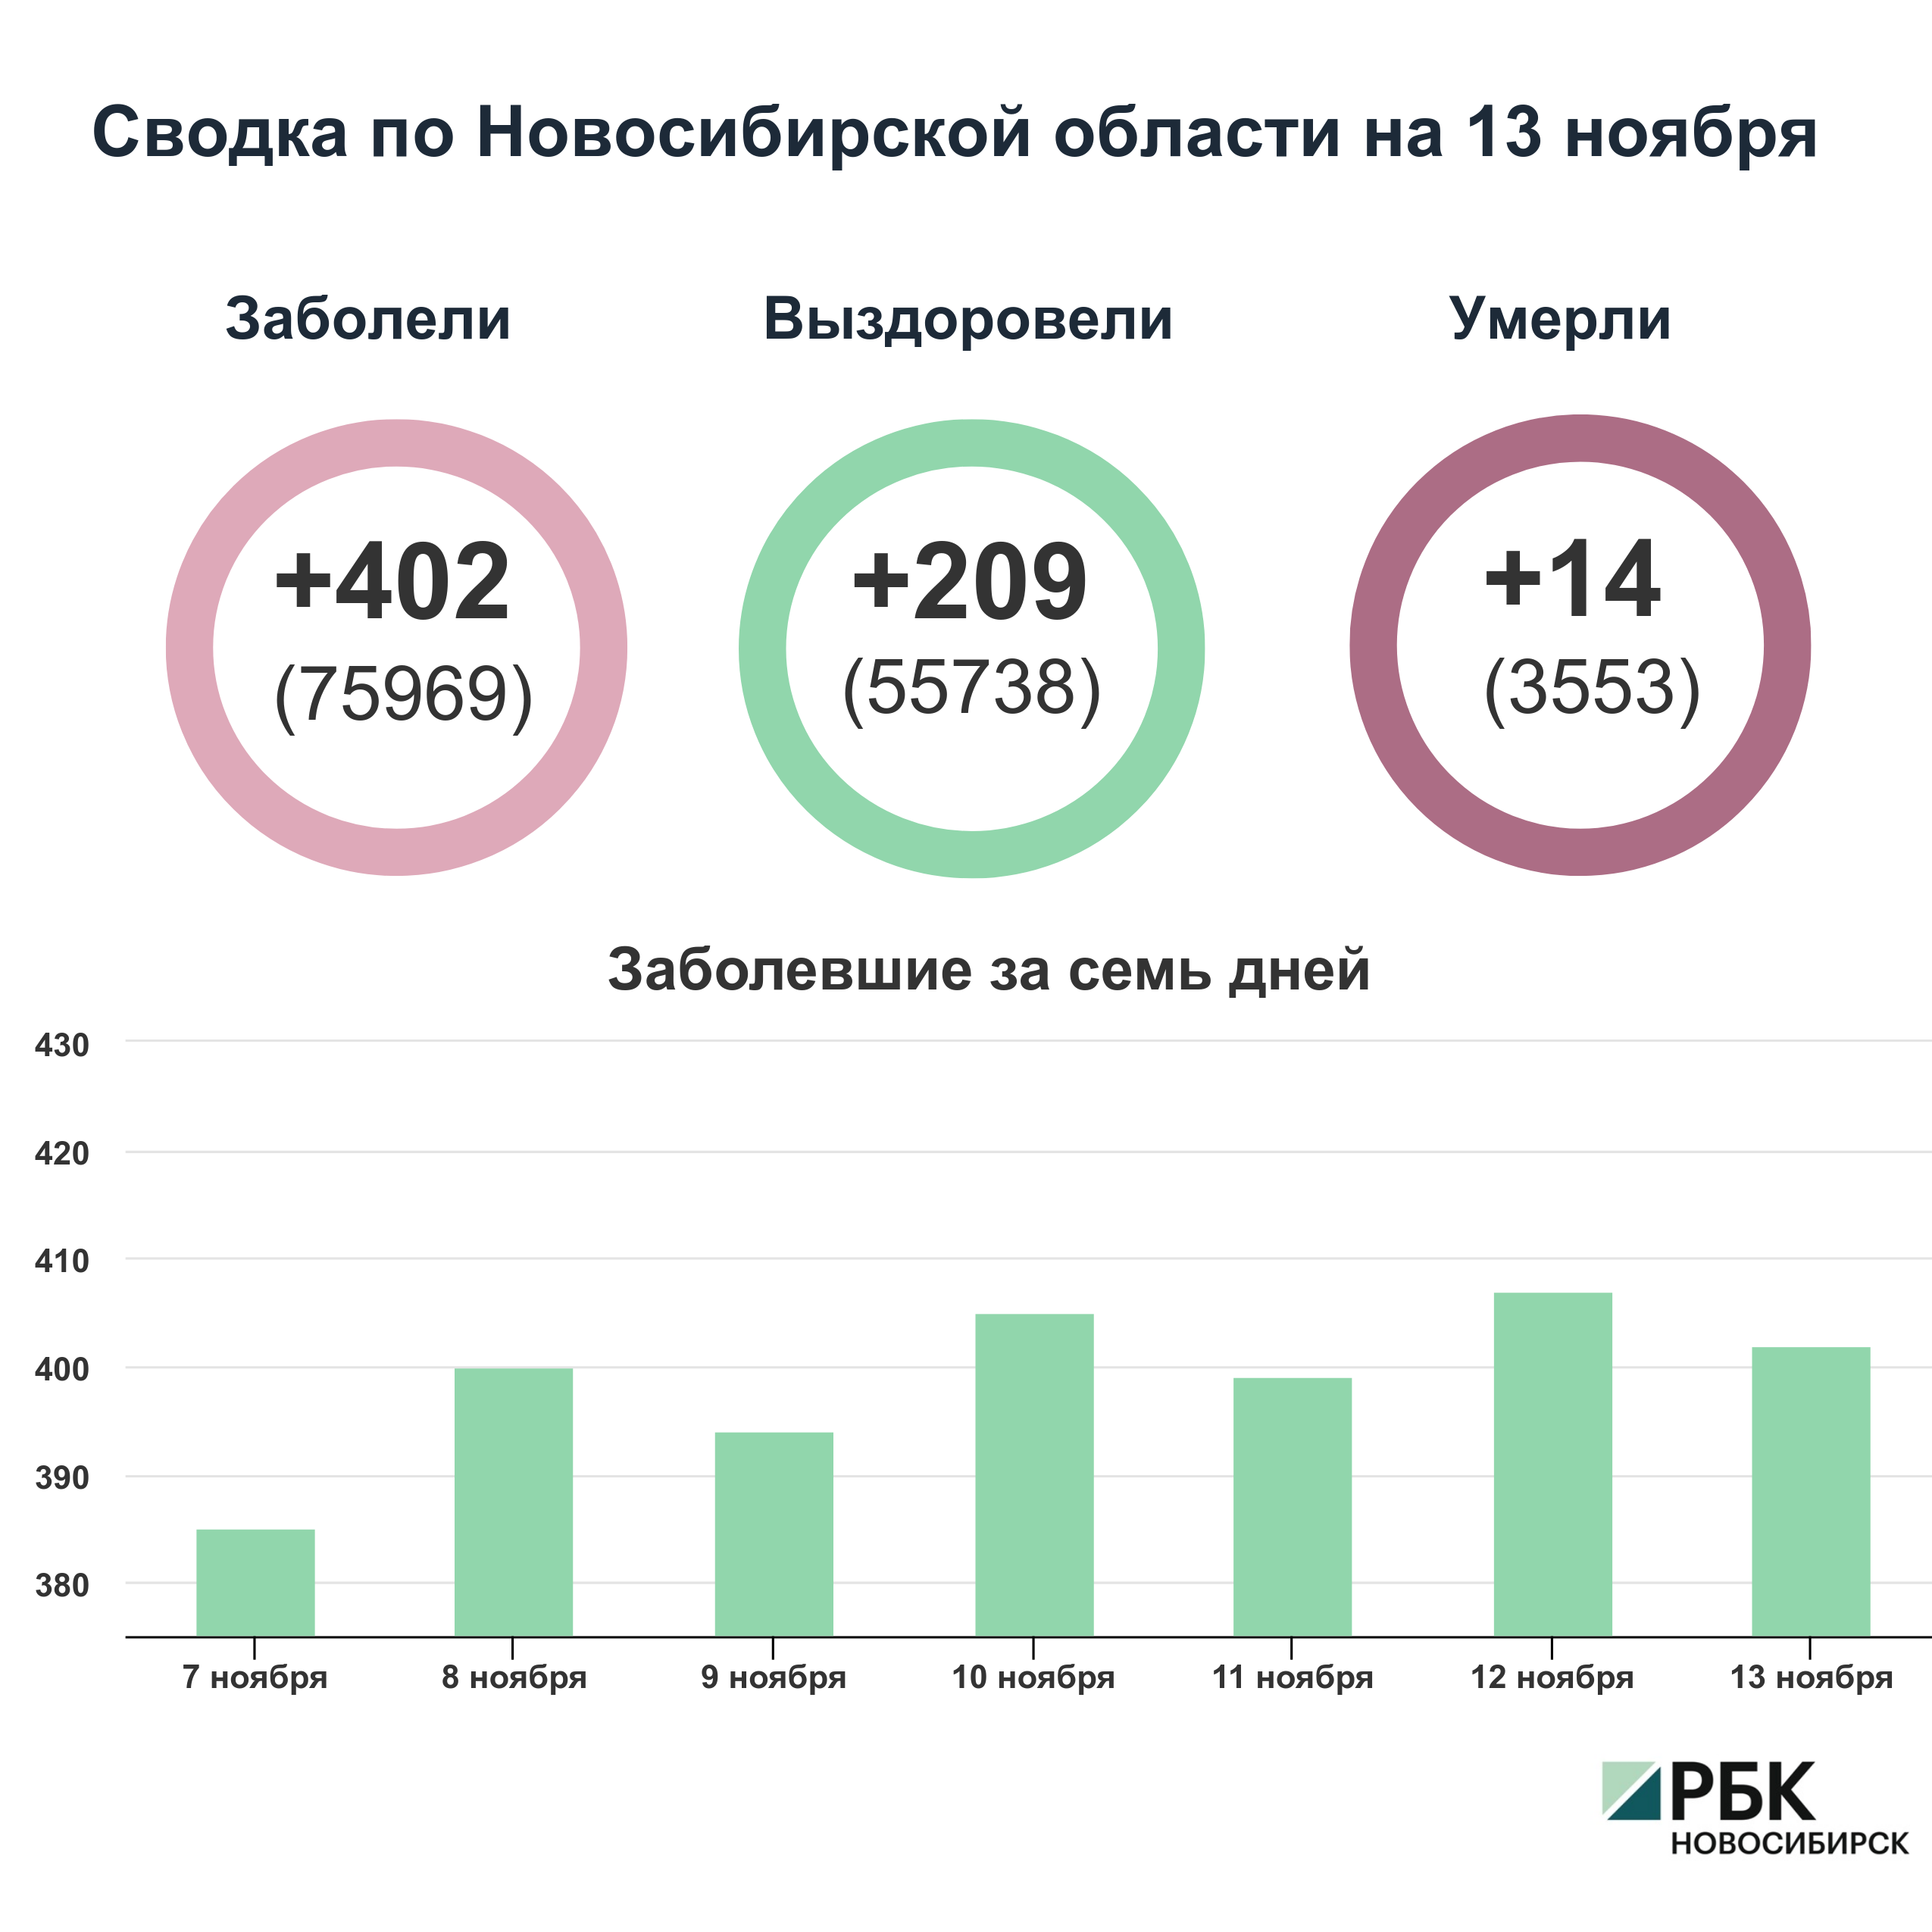 Коронавирус в Новосибирске: сводка на 13 ноября